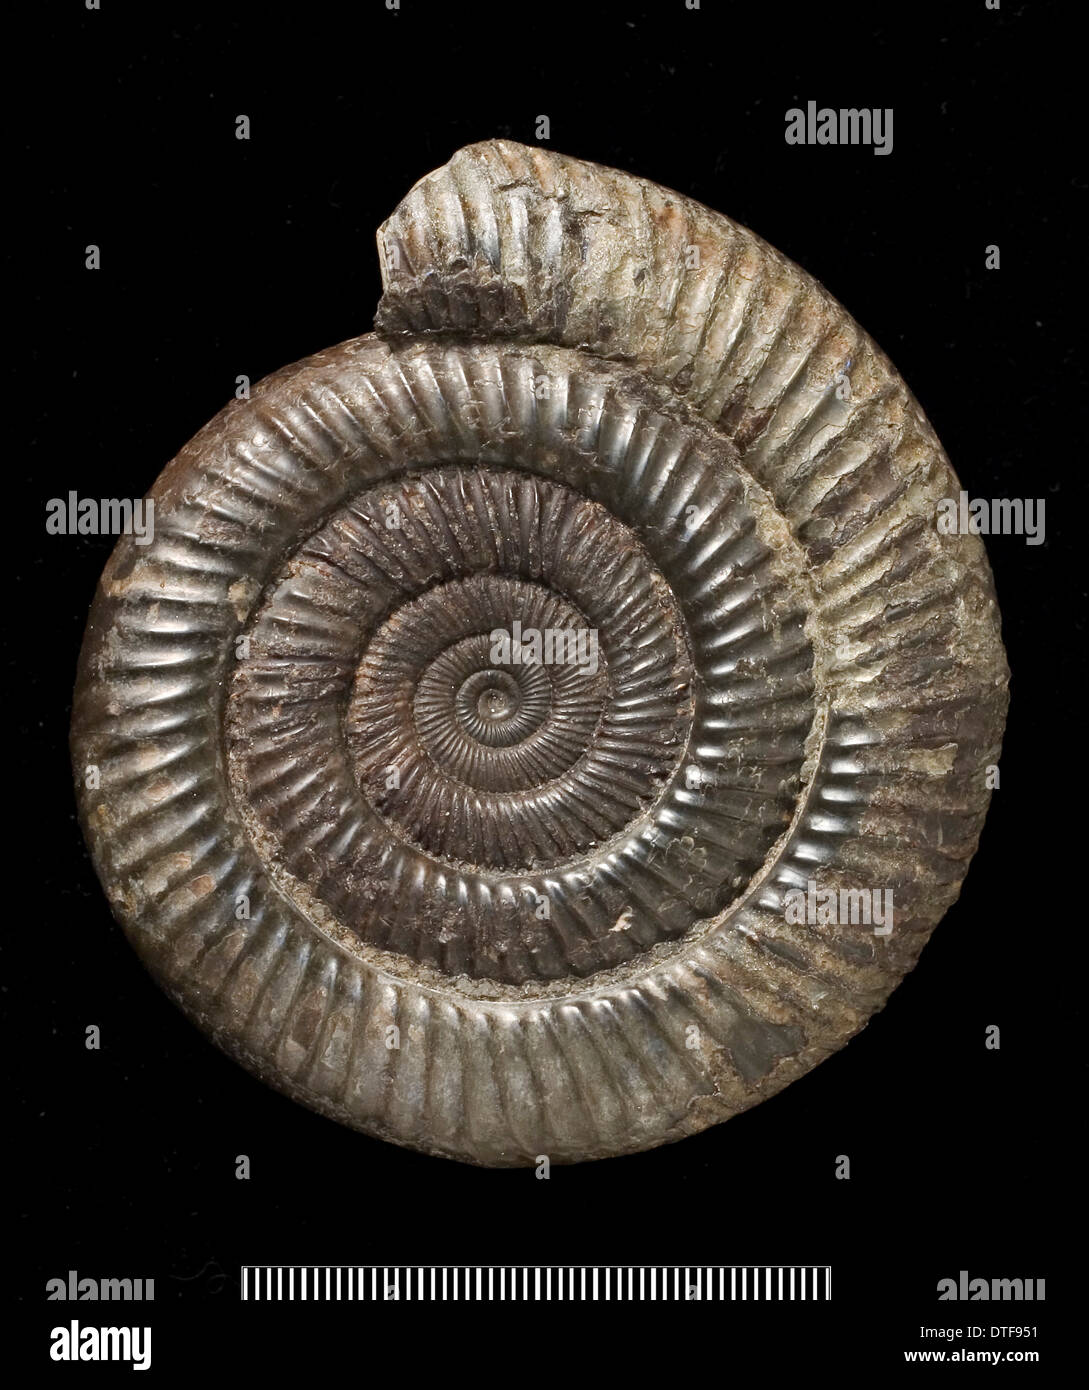 Dactylioceras, fossil ammonite Stock Photo - Alamy